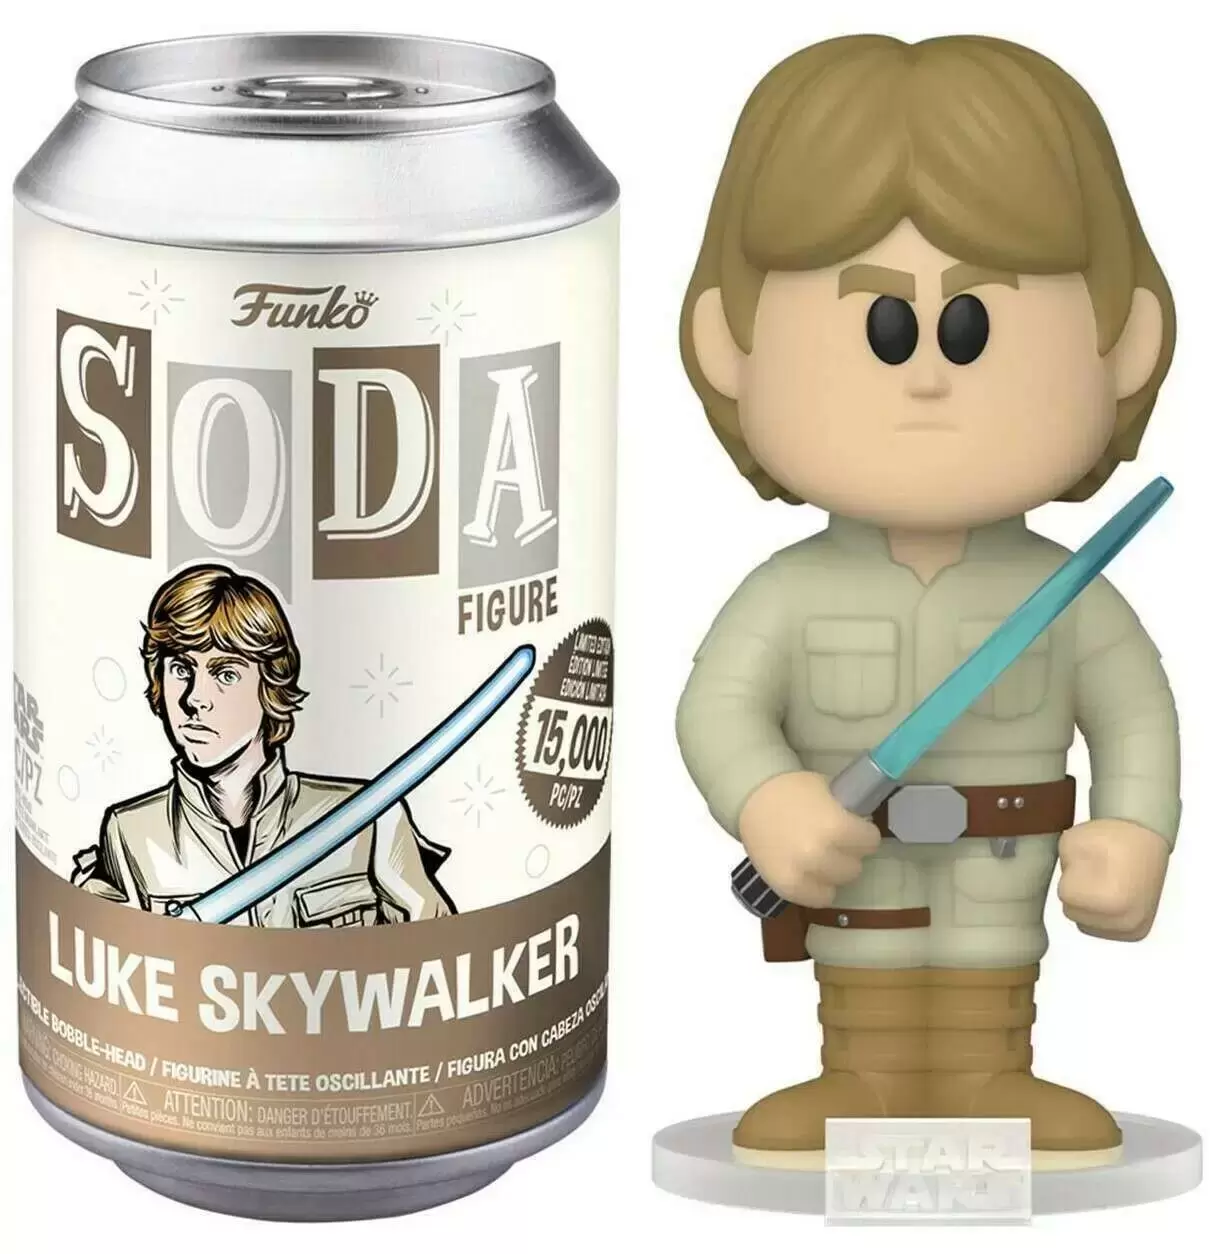 Vinyl Soda! - Star Wars - Luke Skywalker